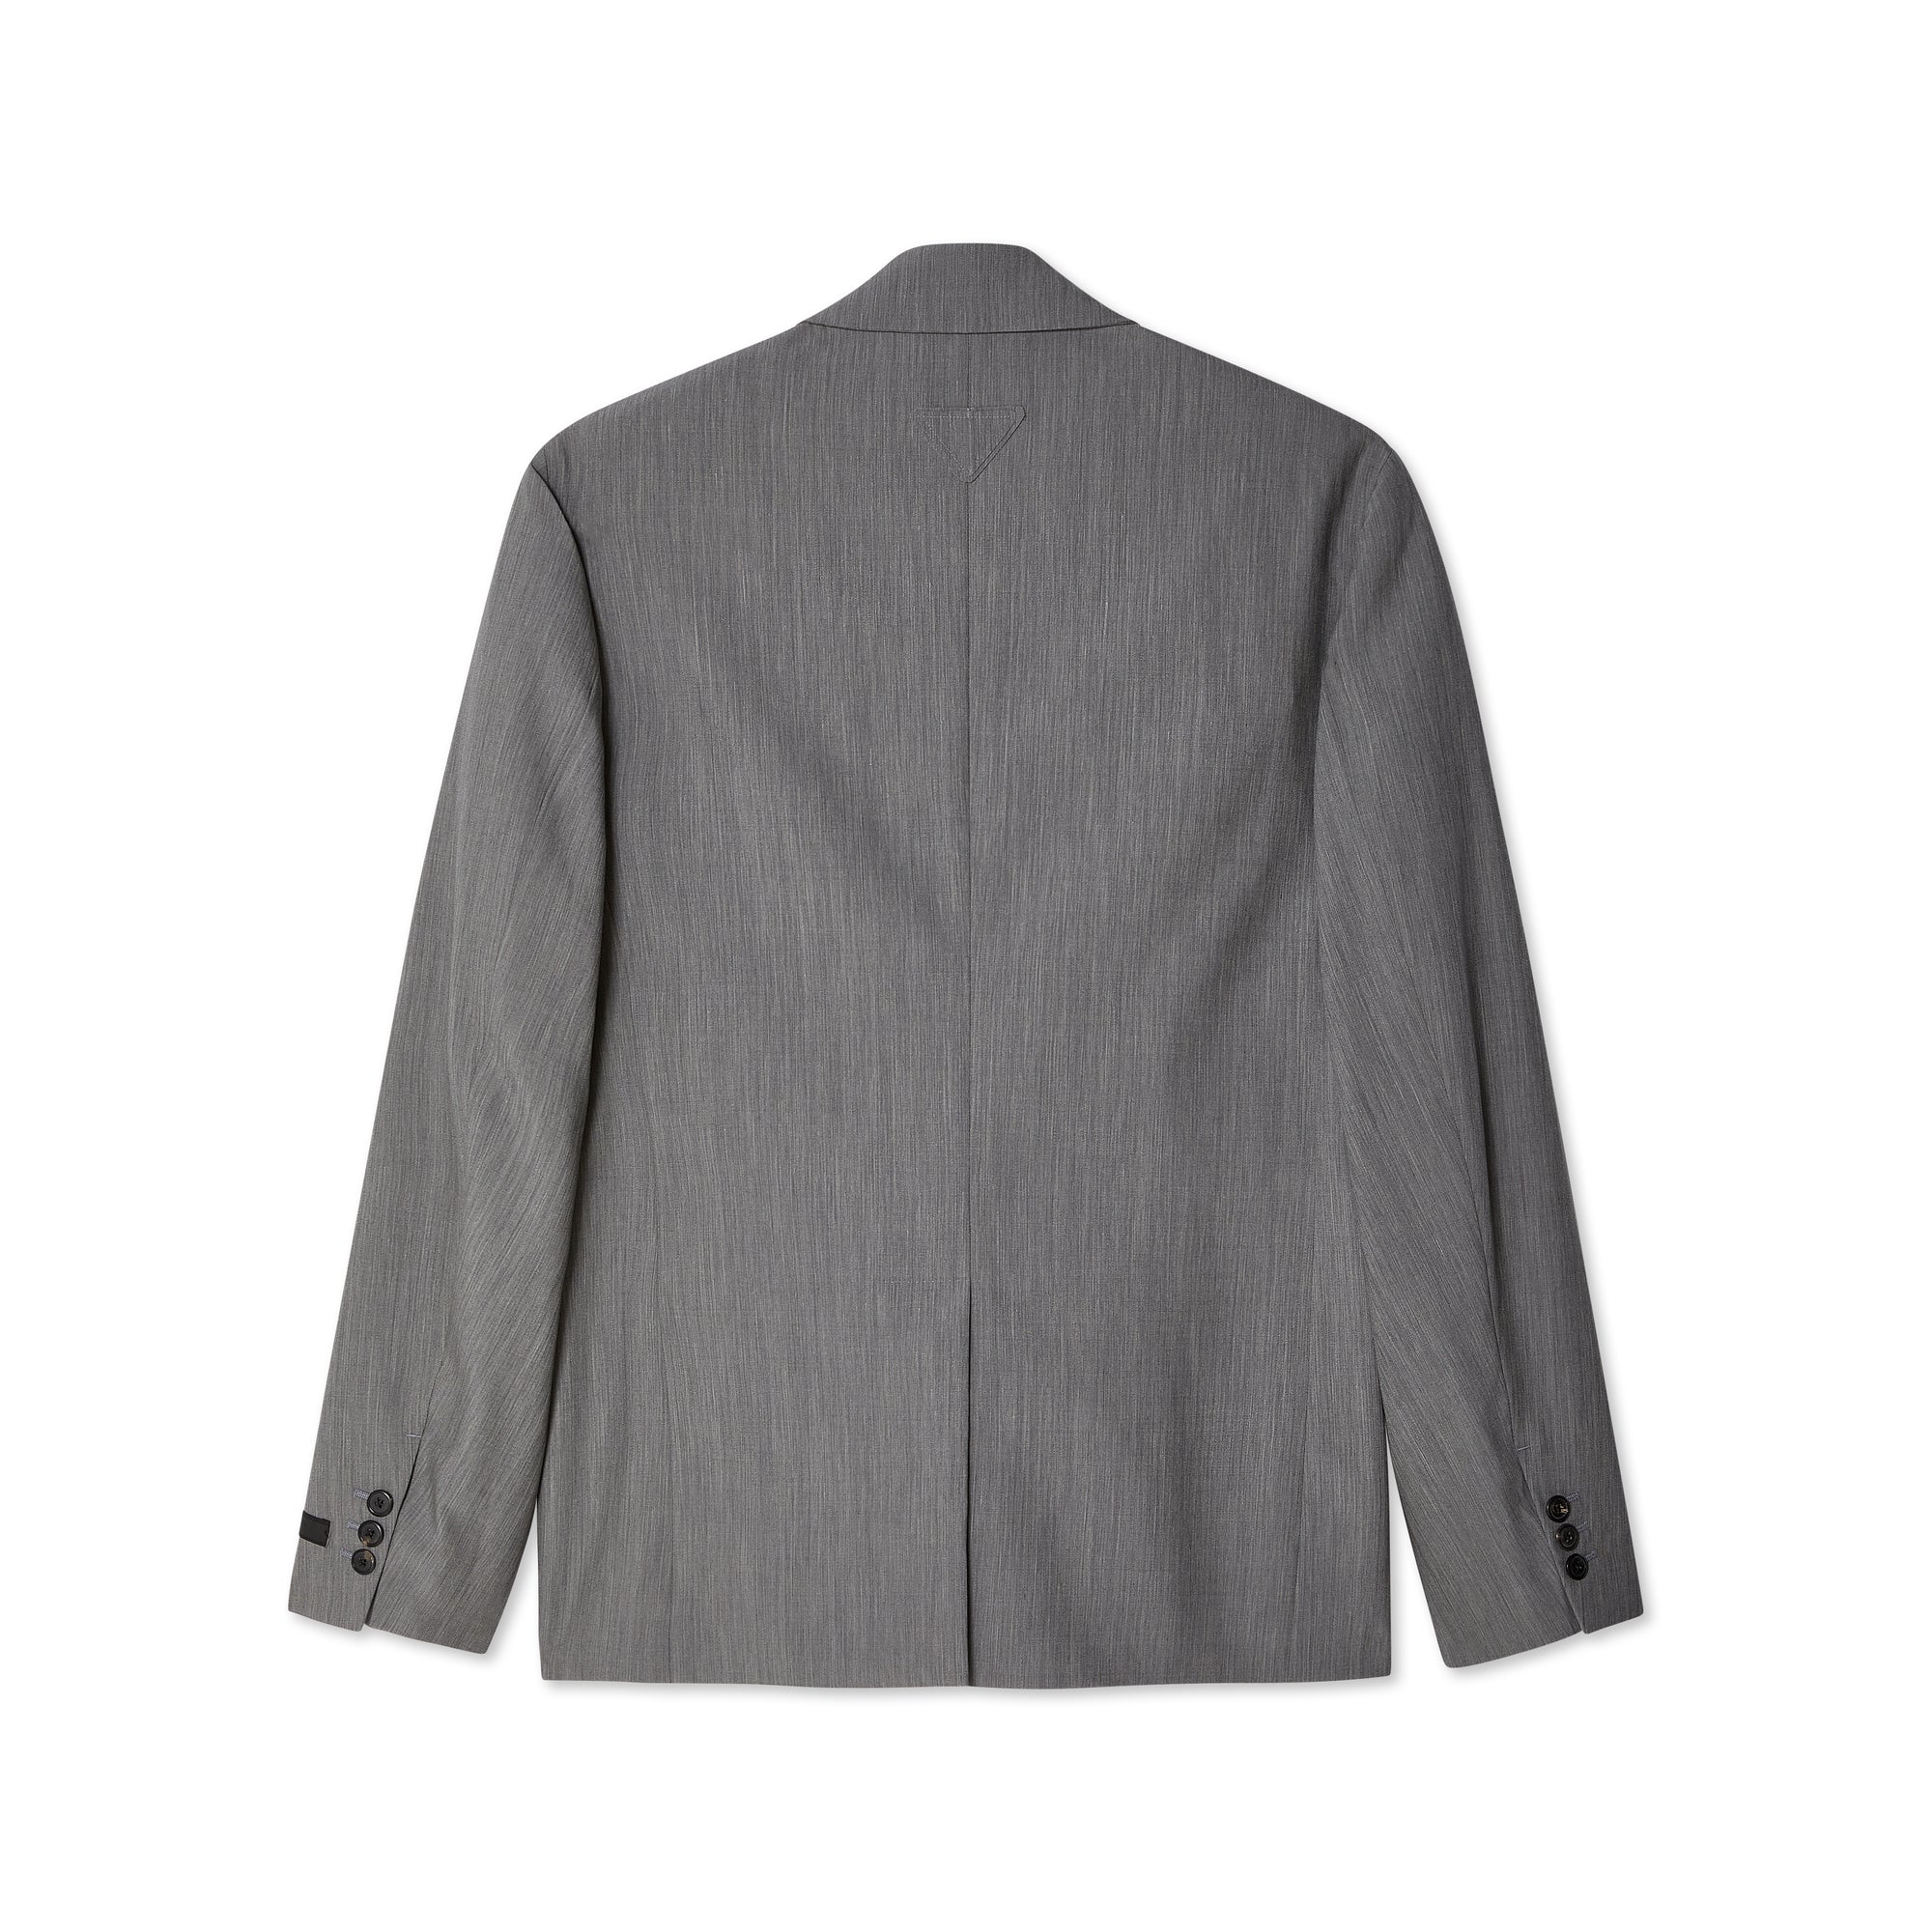 Prada - Men's Single-Breasted Mohair Jacket - (Grey) view 2